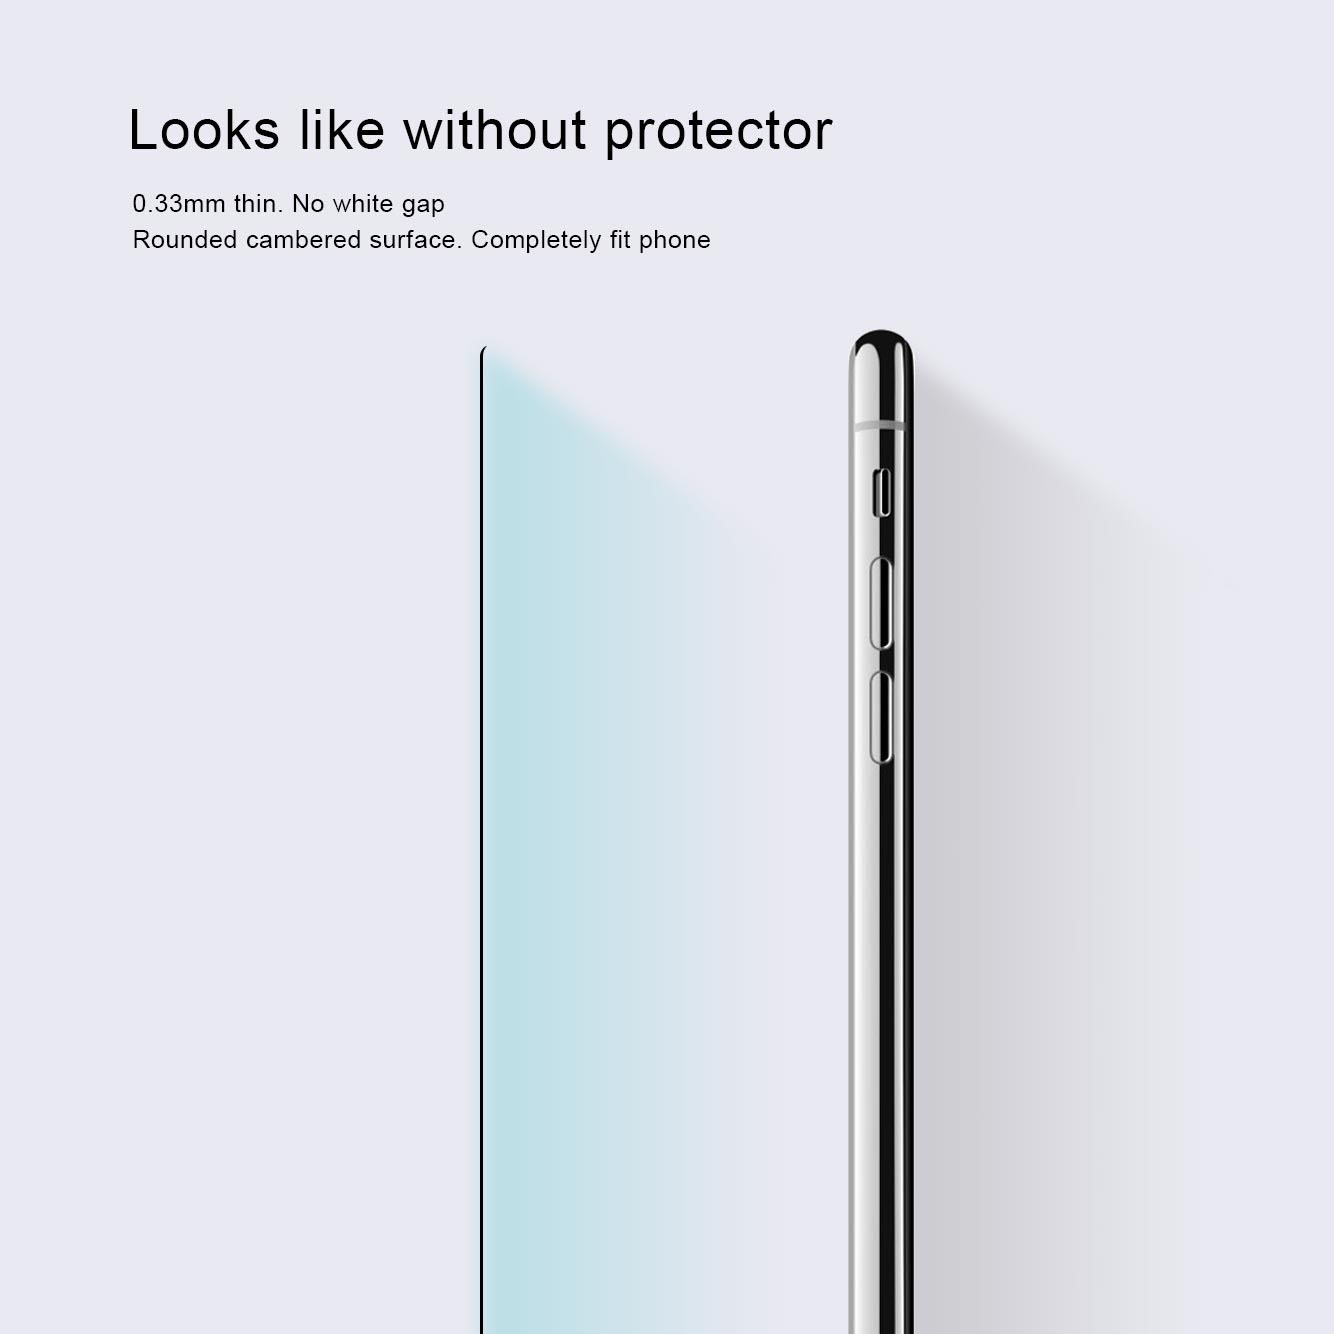 iPhone 11 screen protector